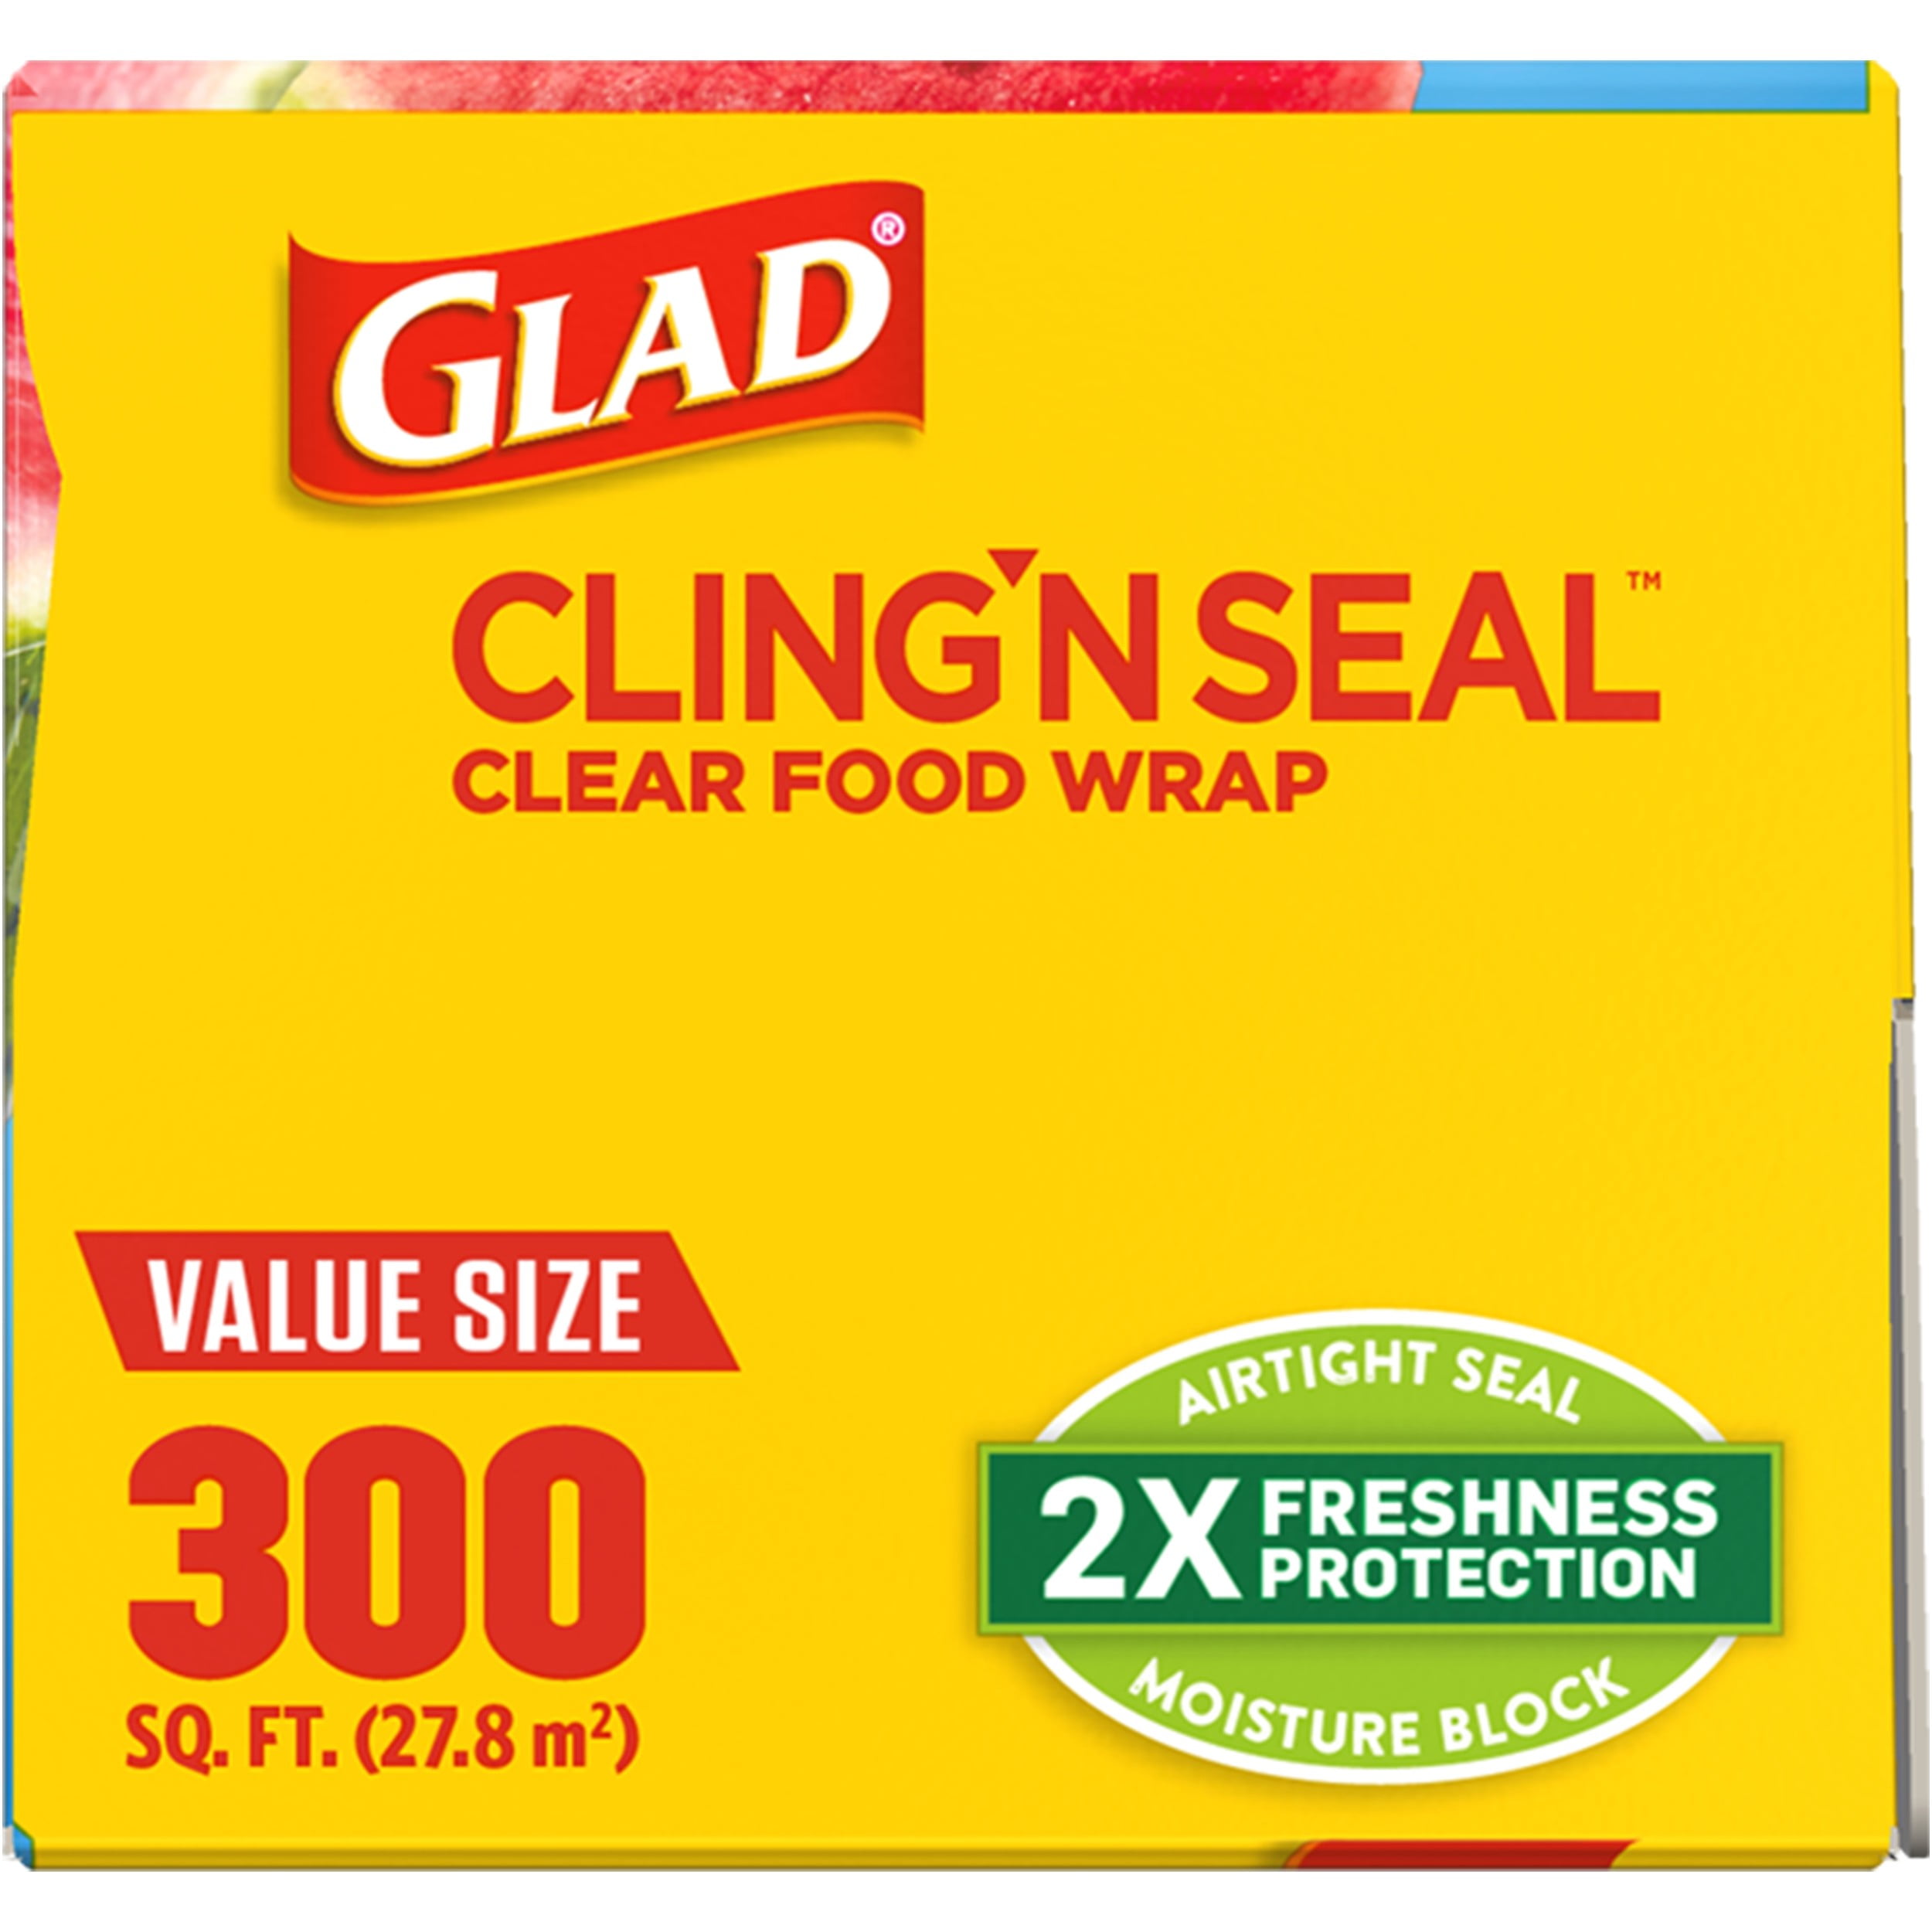 Glad ClingWrap Plastic Wrap 300 m – JK Trading Company Inc.